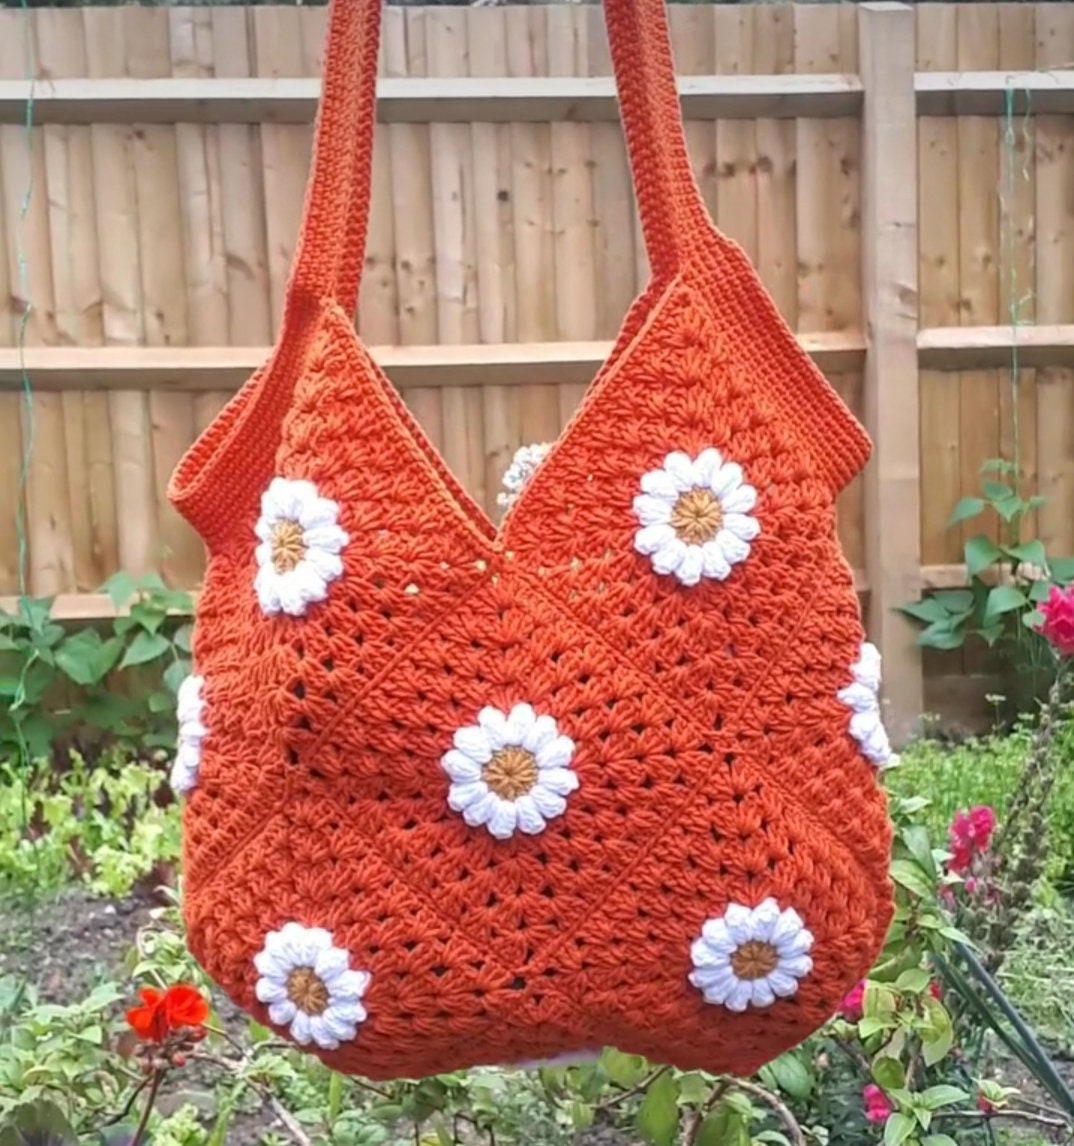 crochet tote bag #crochet #totebag #crochettotebag
#HandmadeInUK #bag
#etsy #etsyshop #CraftBizParty
#crochetflowers #ukhandmade 
etsy.com/listing/153593… via @etsy